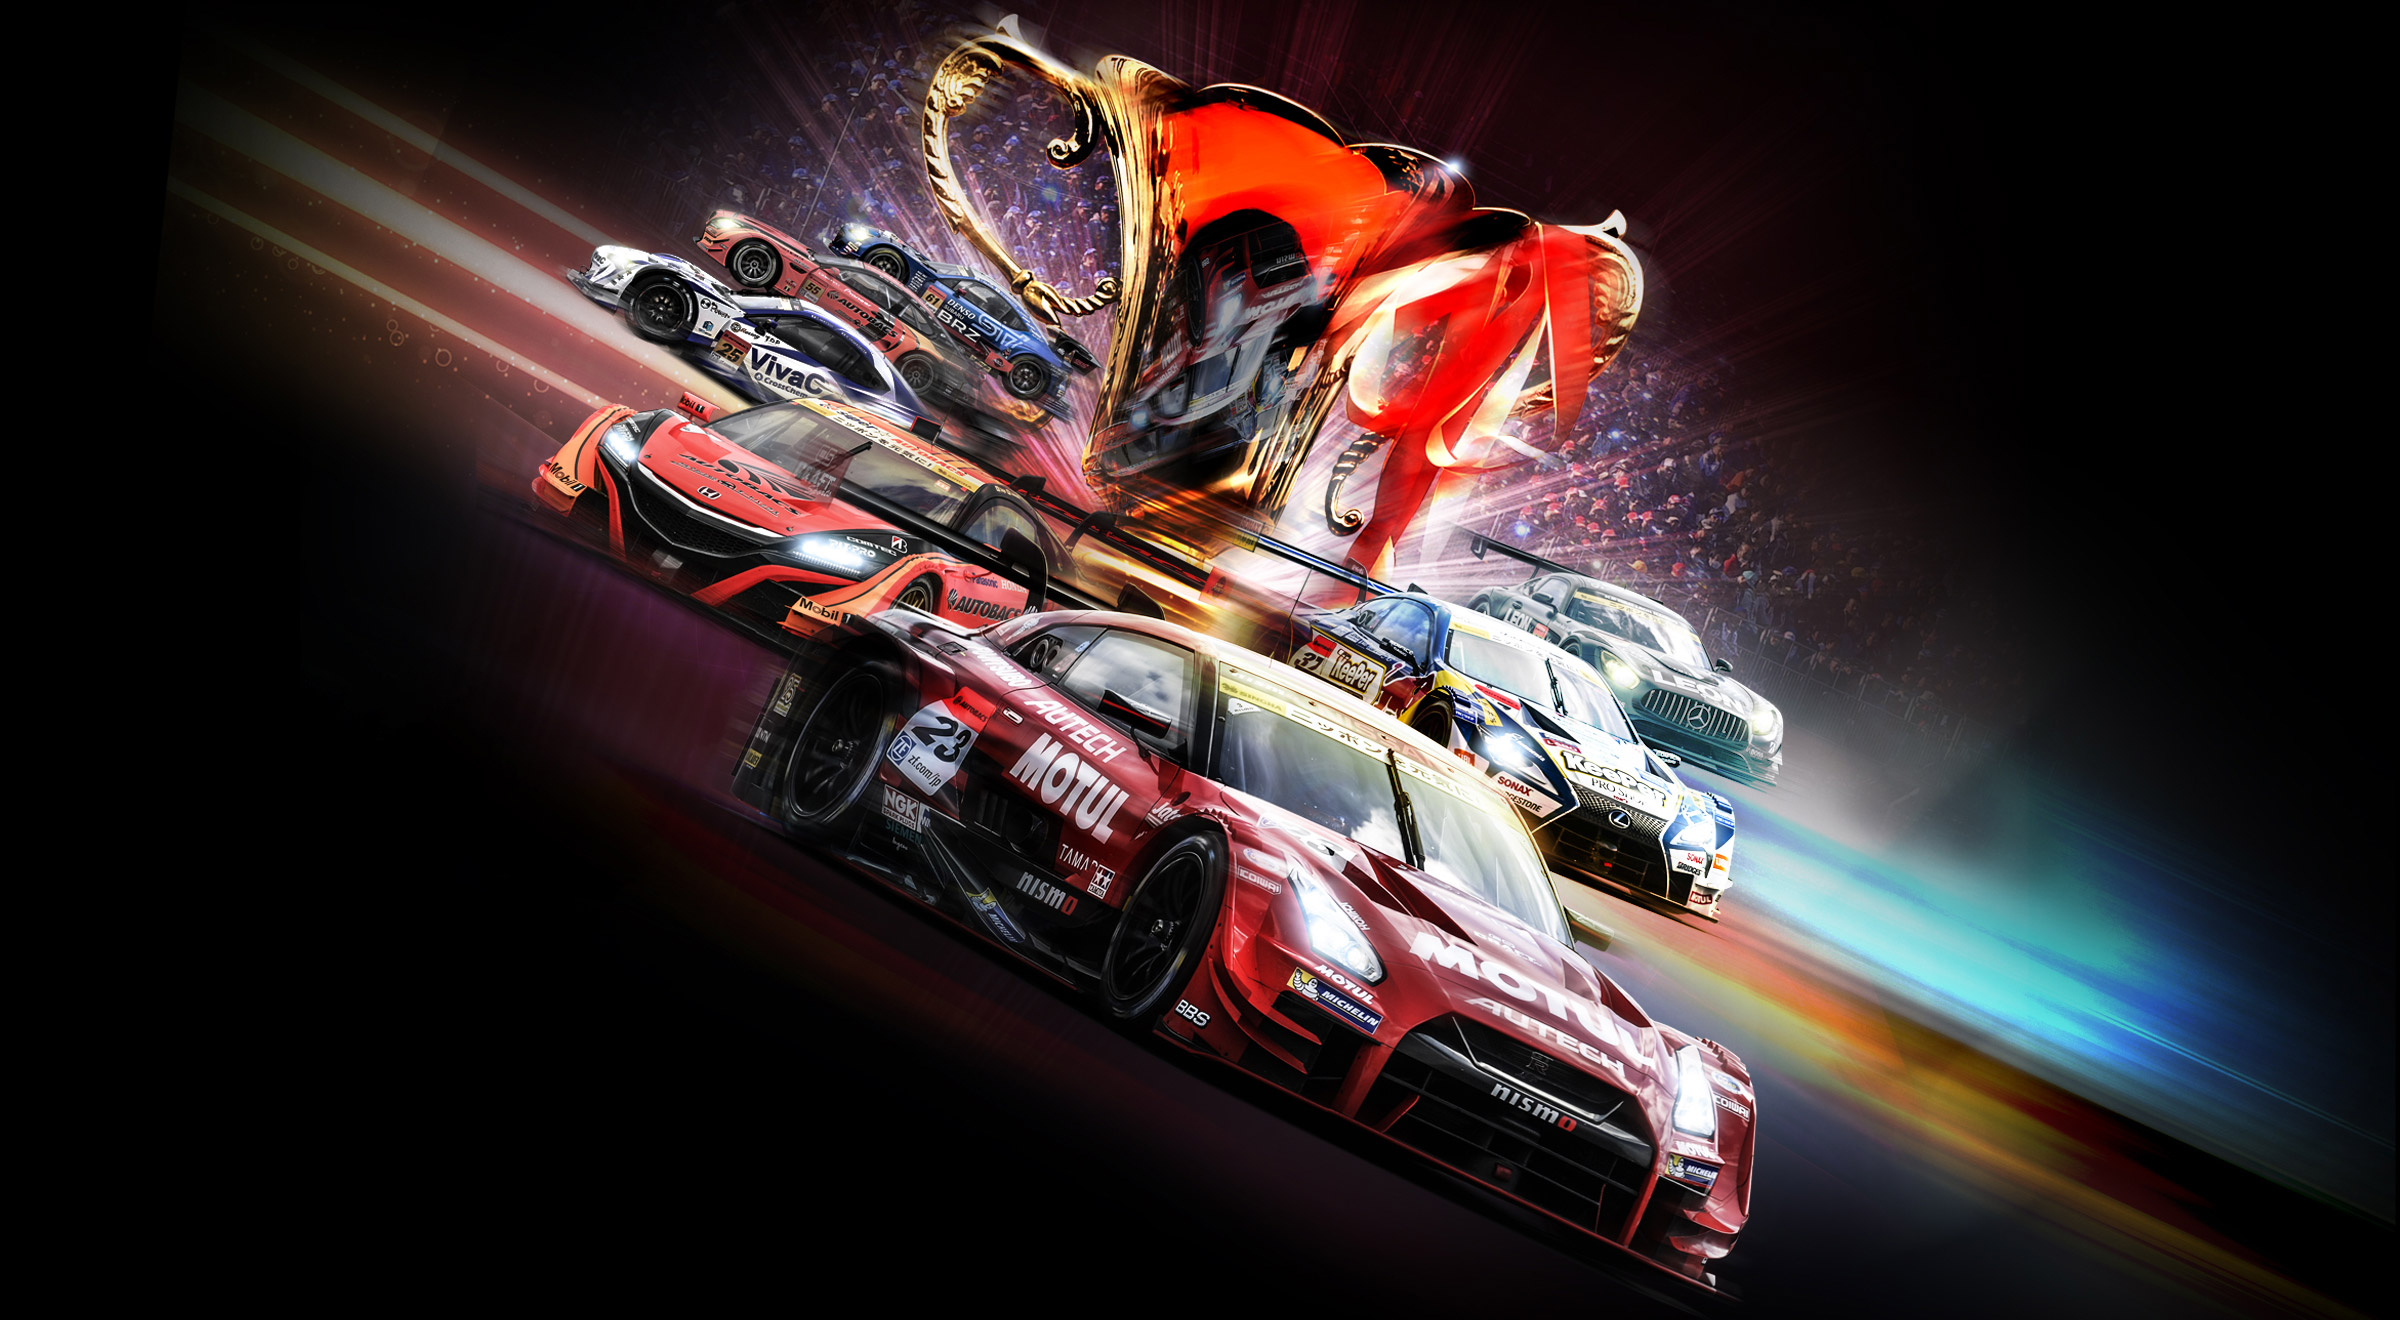 SUPER GT Main Visual 各戦毎にレースの注目点や特徴をクールに描き出すメインビジュアル